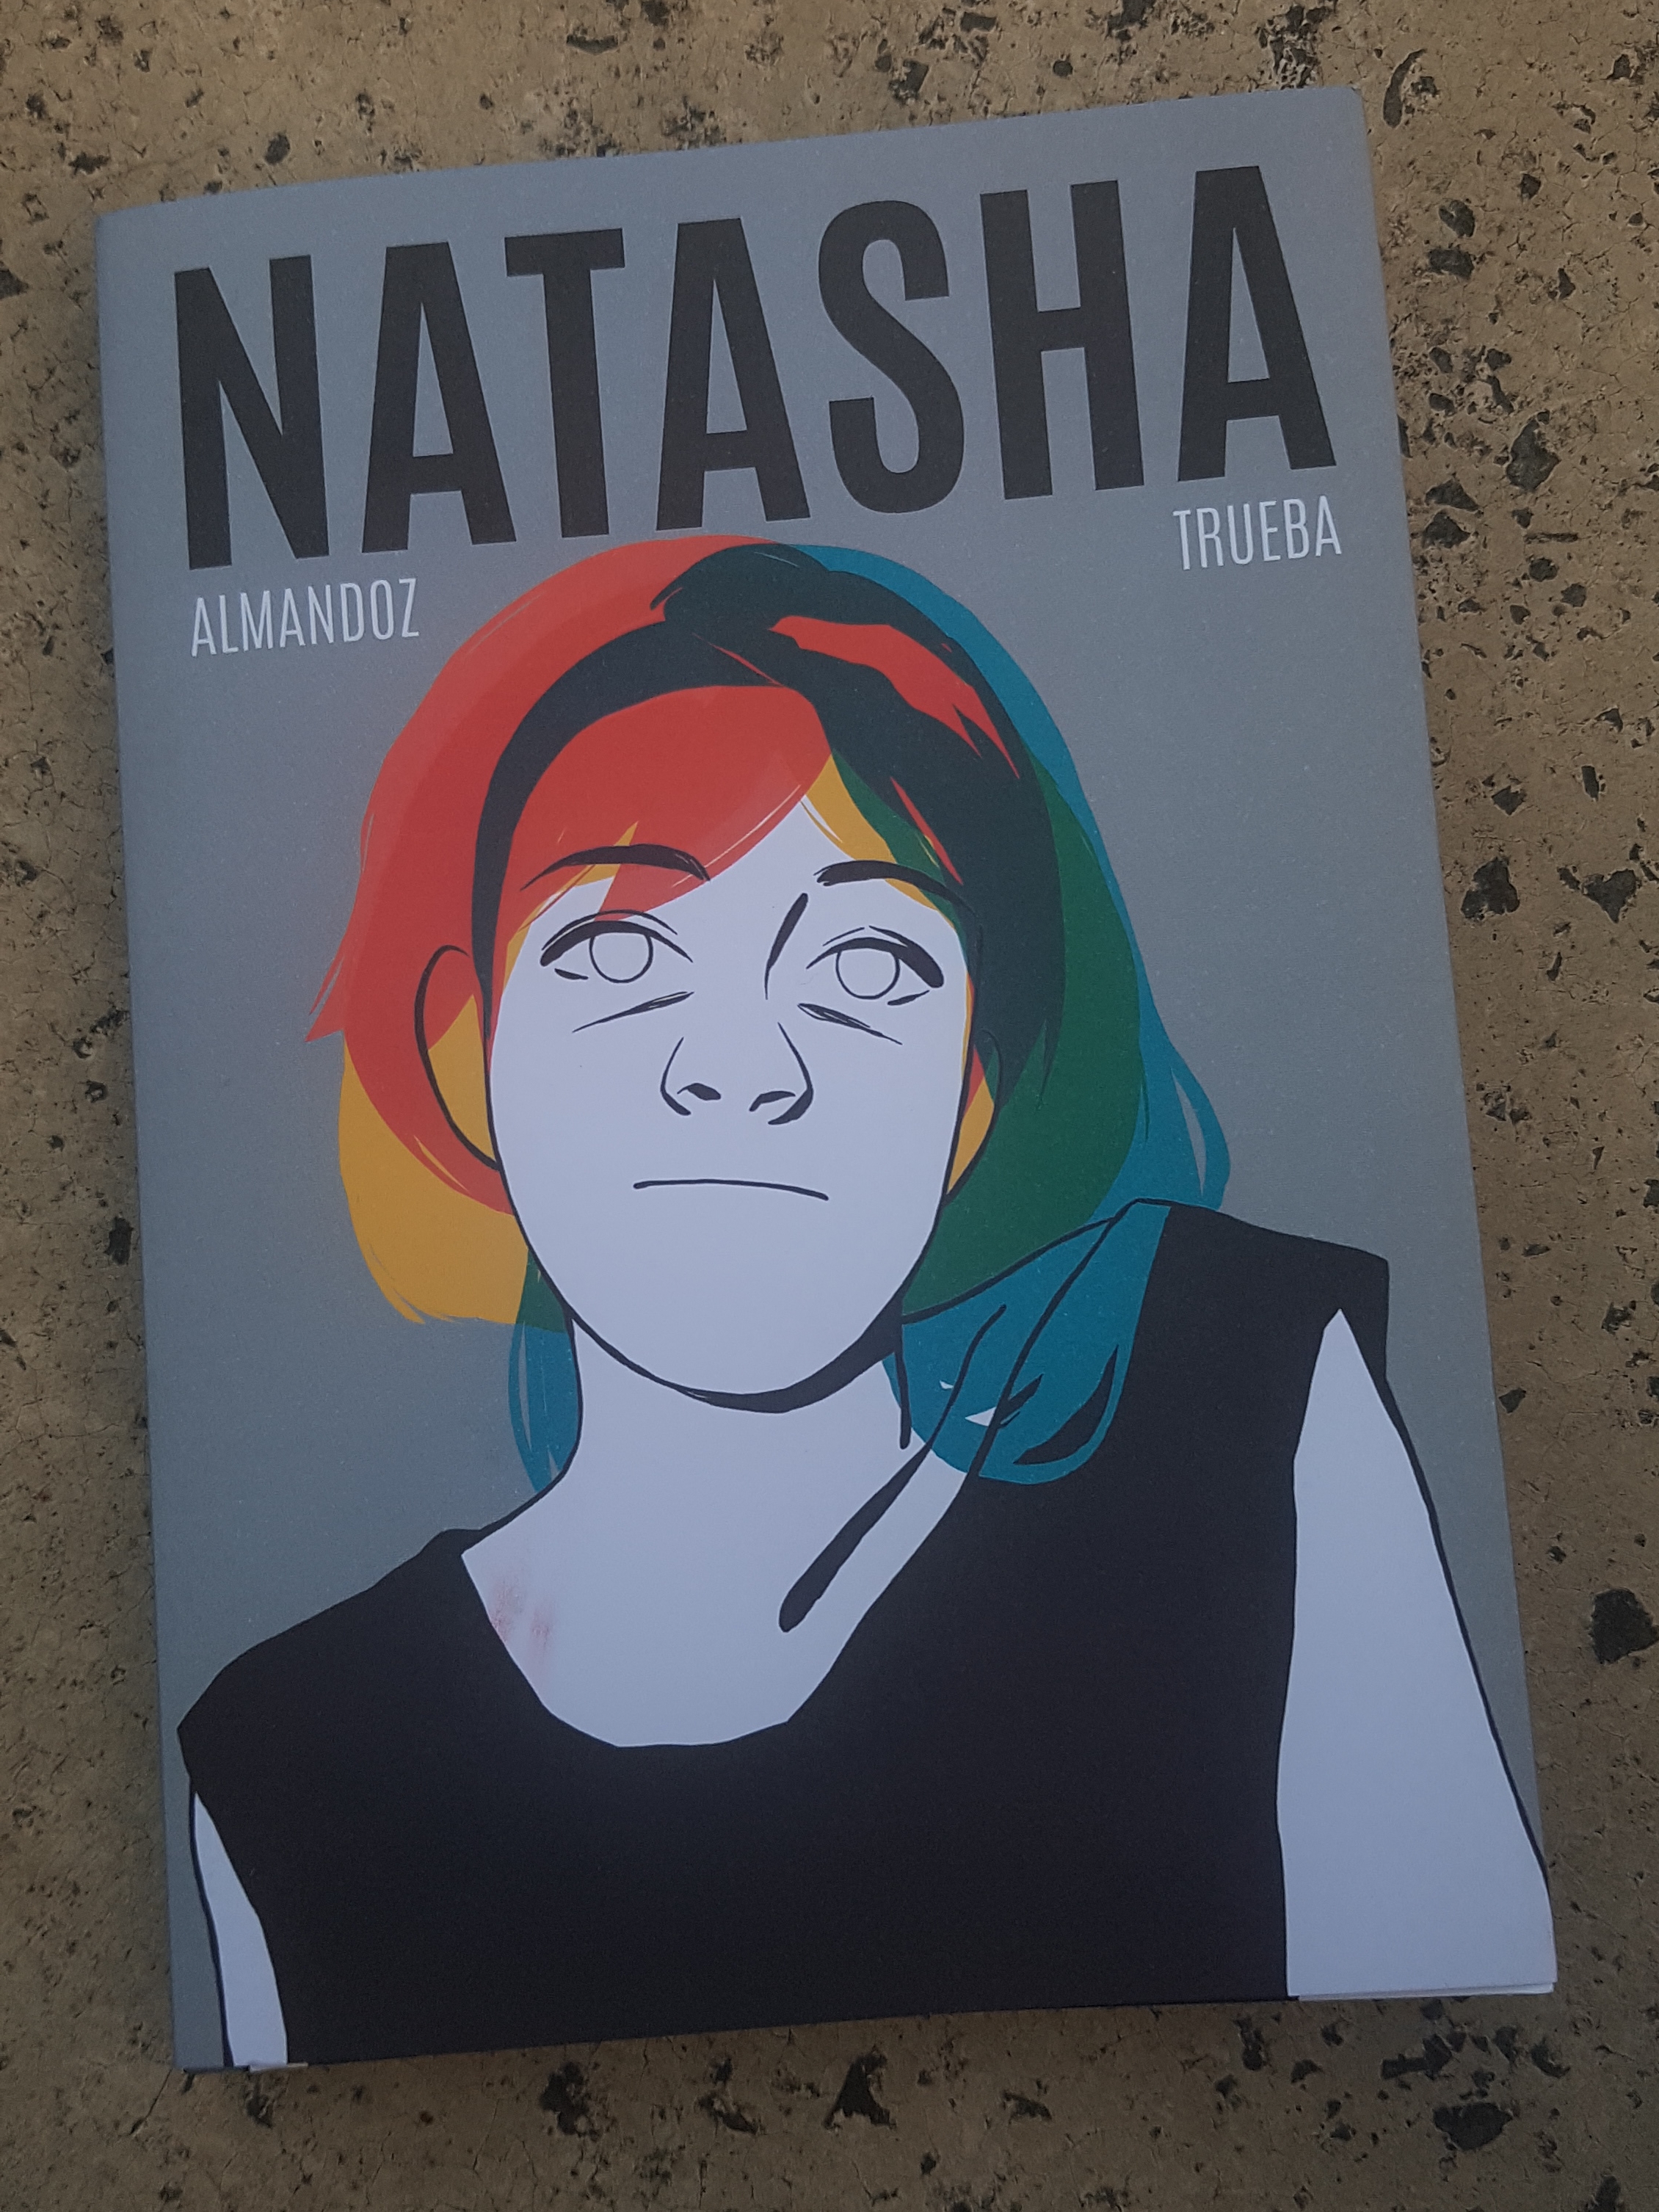 Natasha (GraphicNovel, Euskara language, 2022, Farmazia beltza)